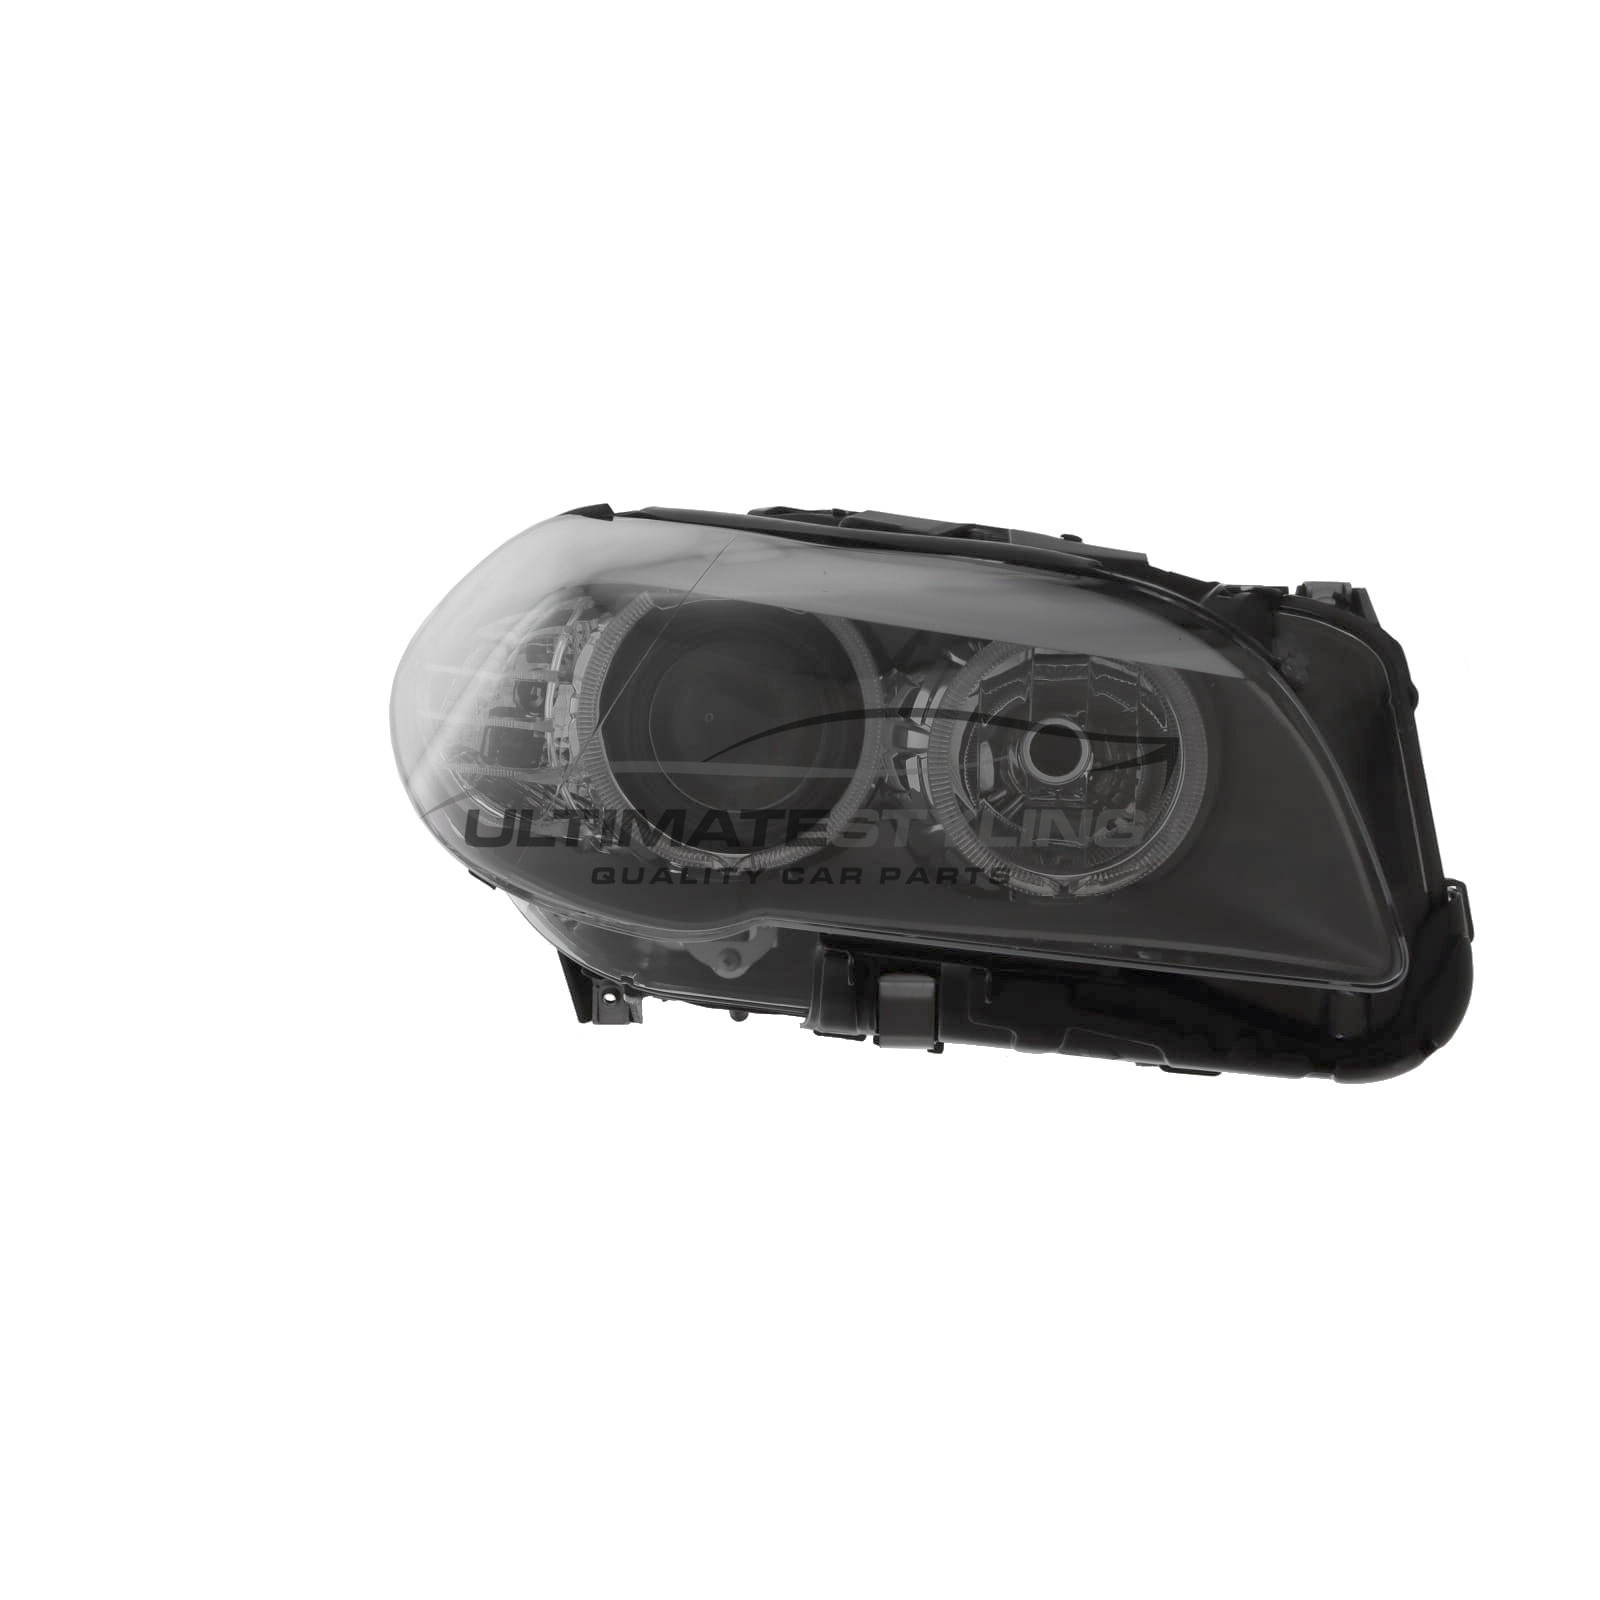 Headlight Base For Bmw 5 Series F18 F10 2014 2015 2016 2017 Headlamp House  Headlight Casing Shell Back Bottom Car Accessories